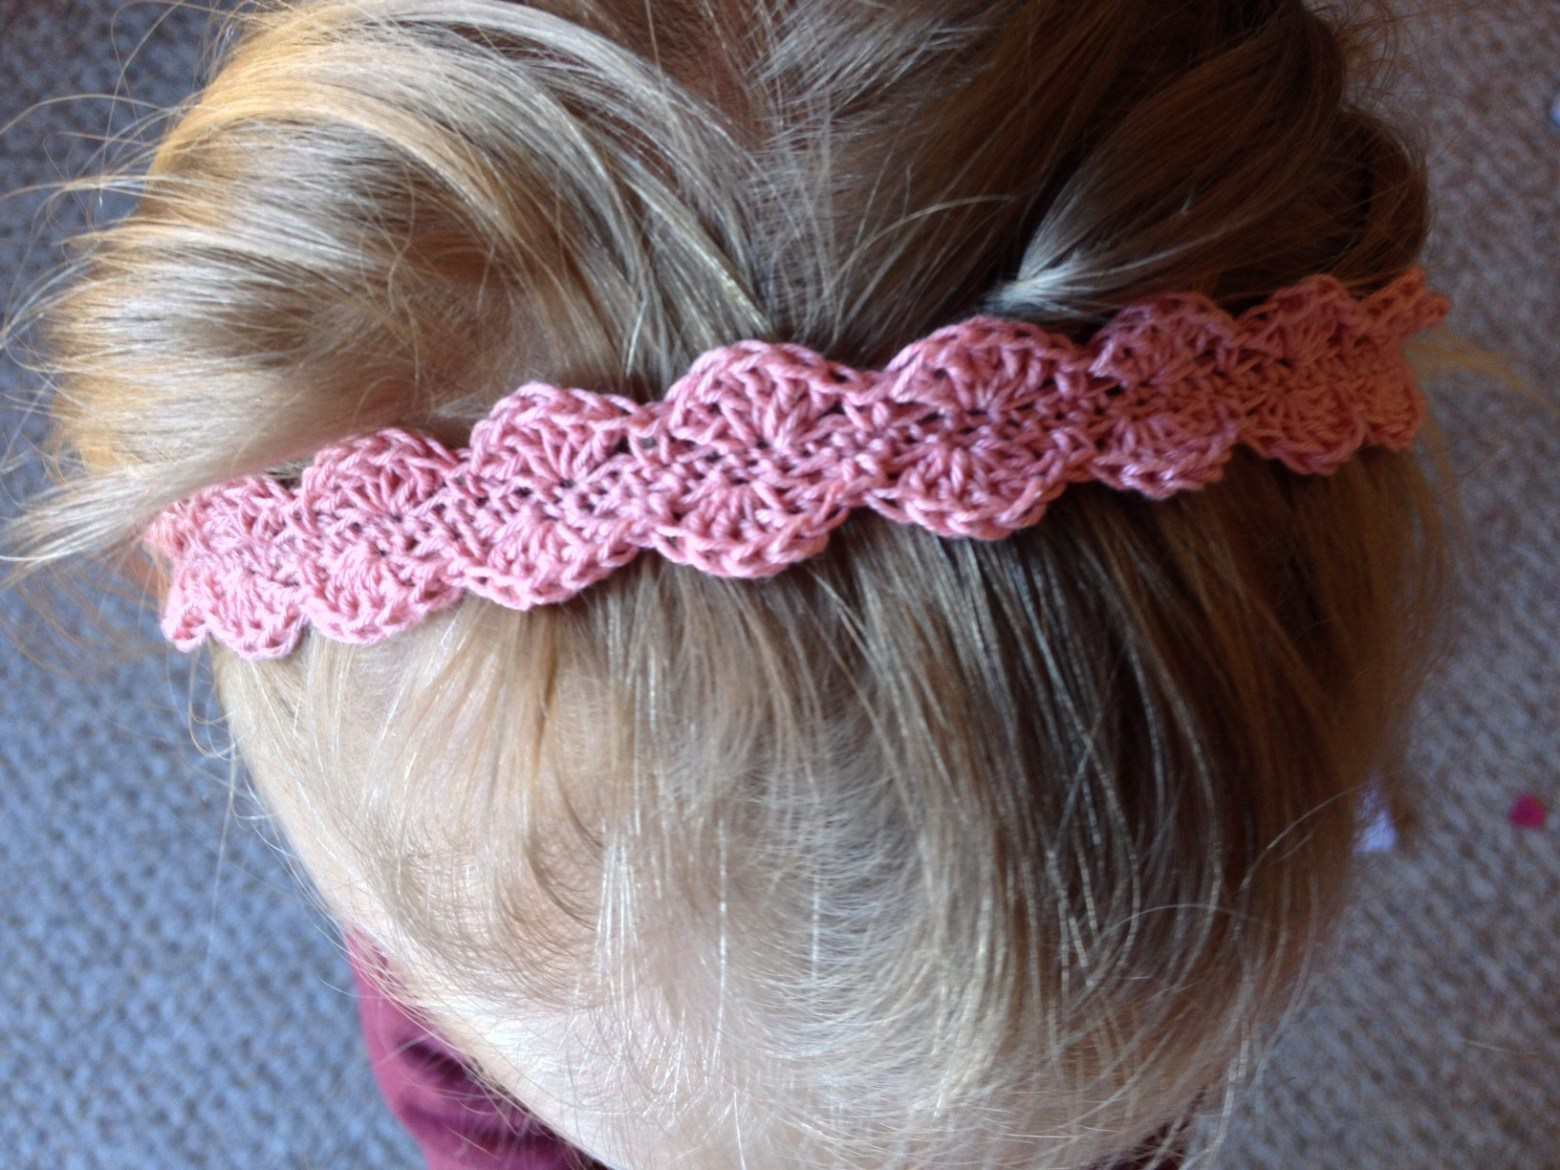 Hair Crochet Patterns 12 Free Patterns For Crochet Headbands